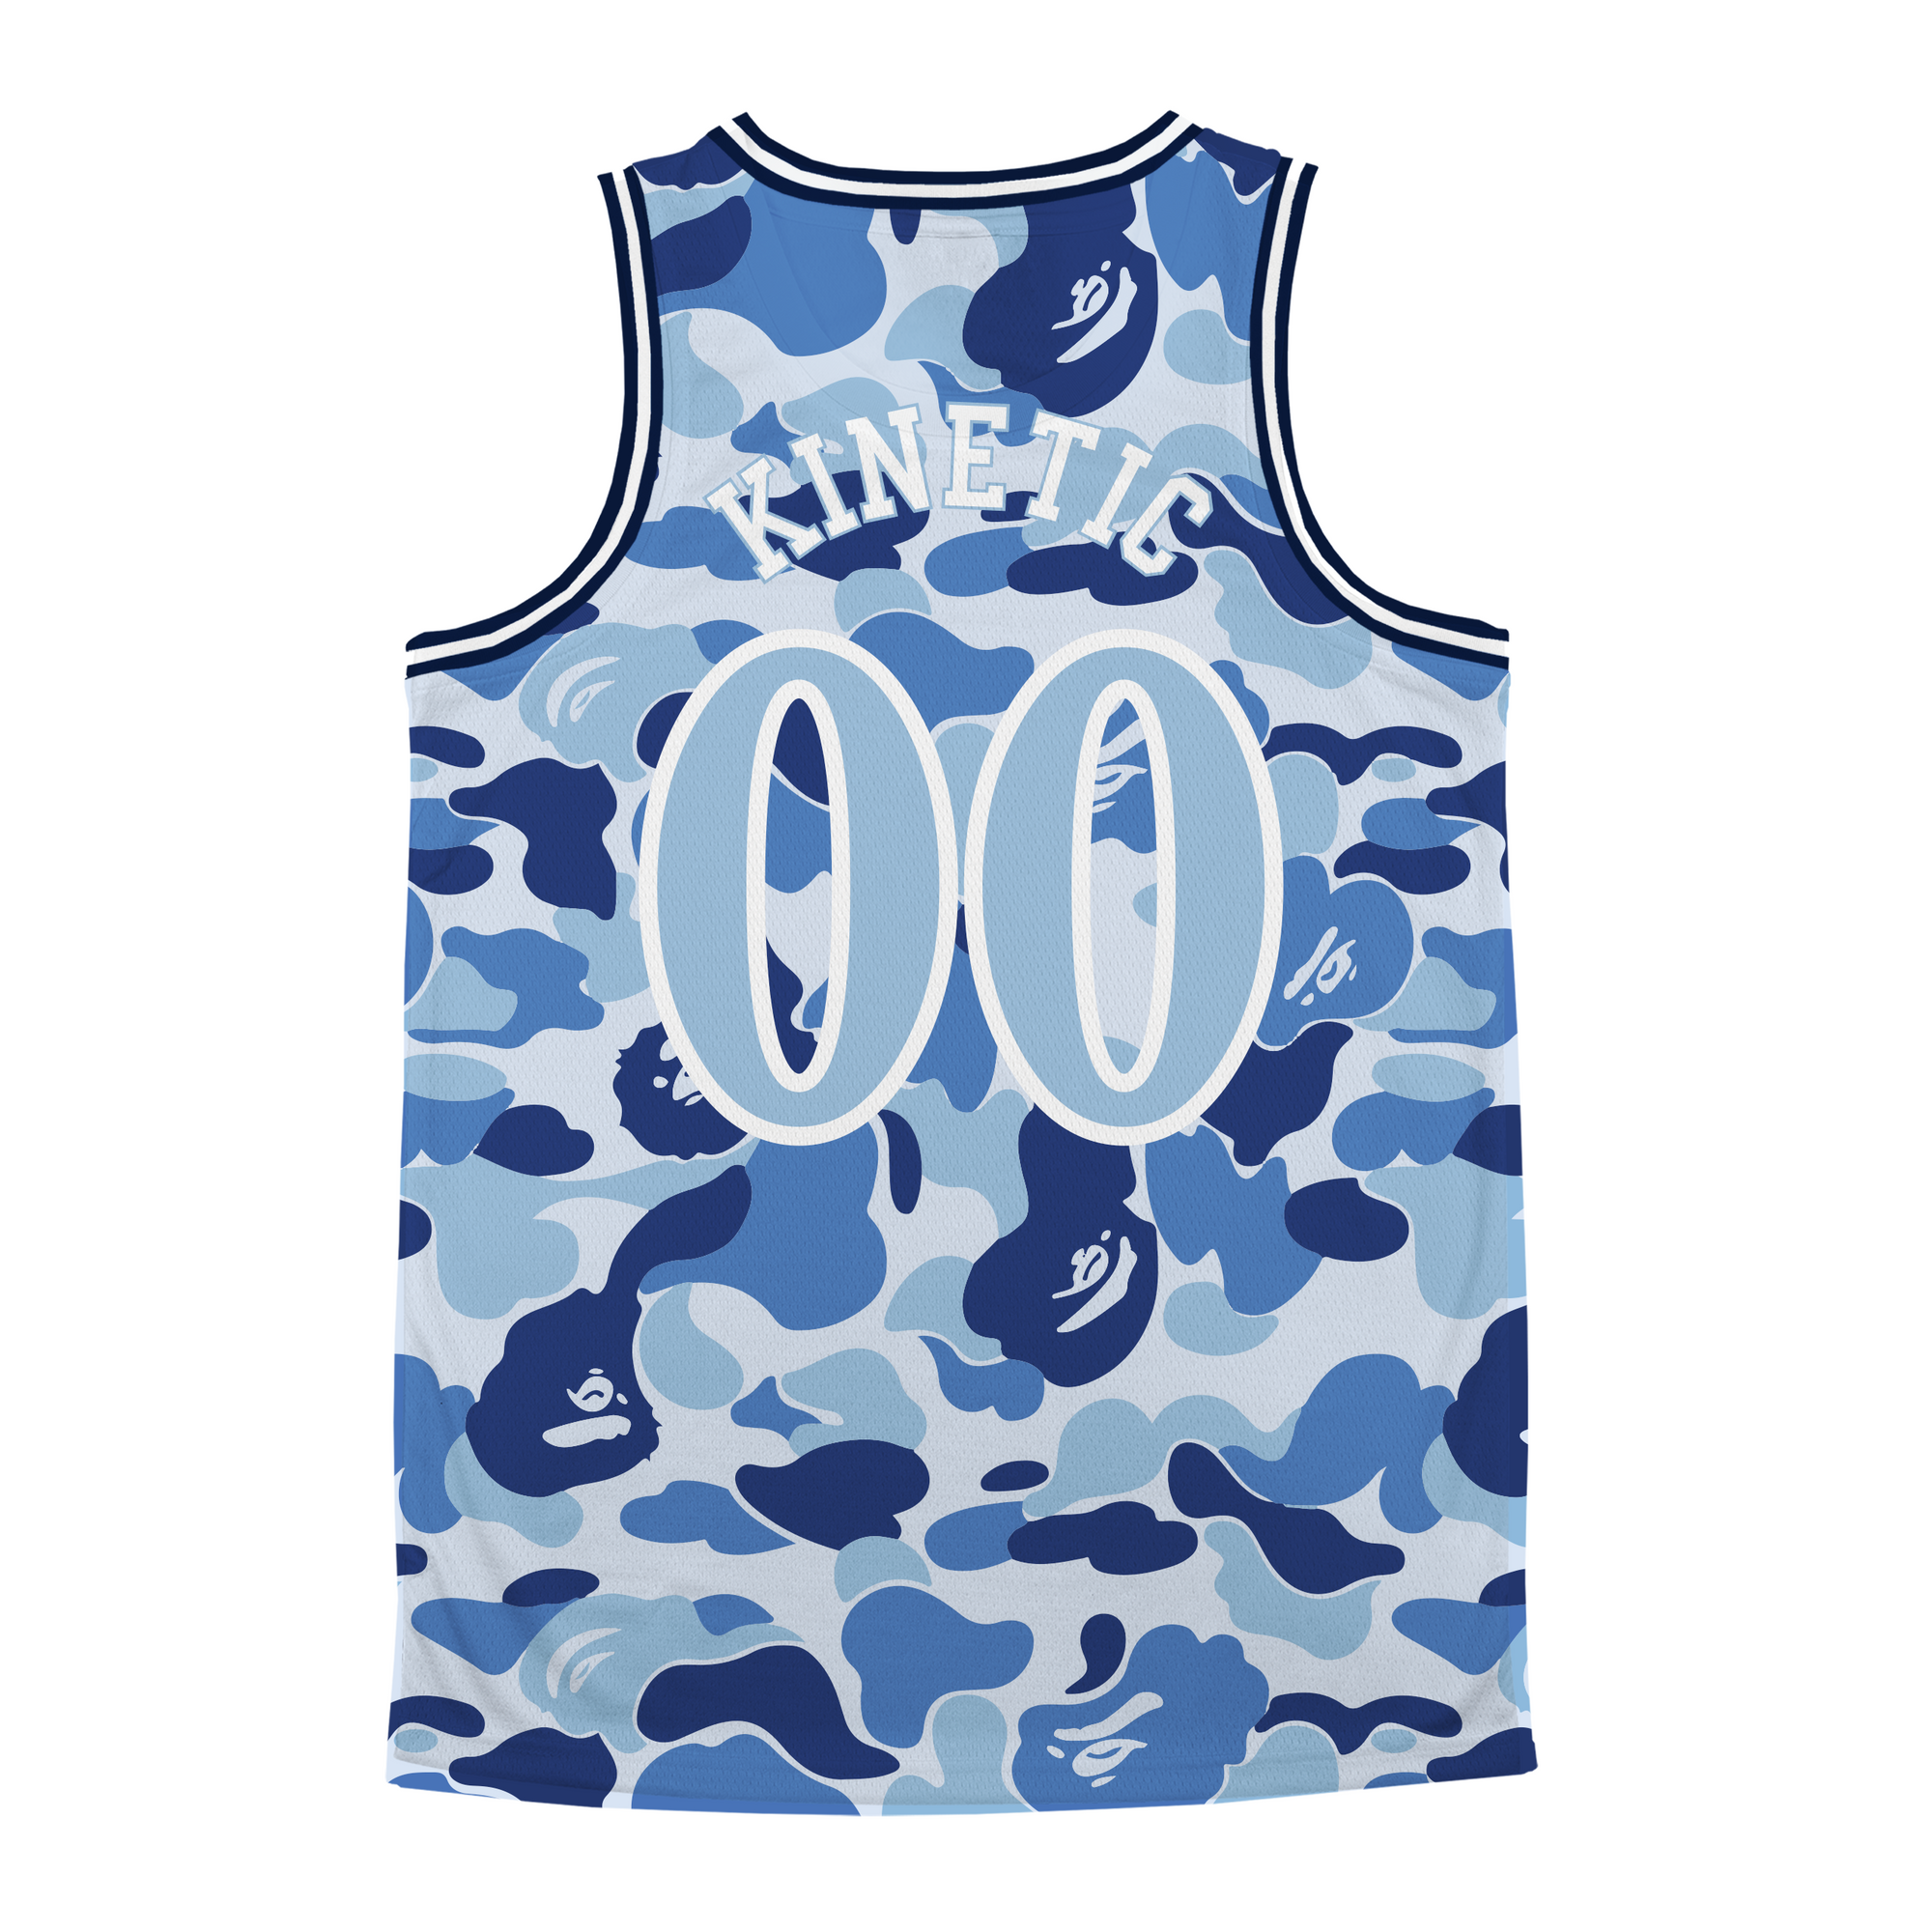 Delta Sigma Phi - Blue Camo Basketball Jersey